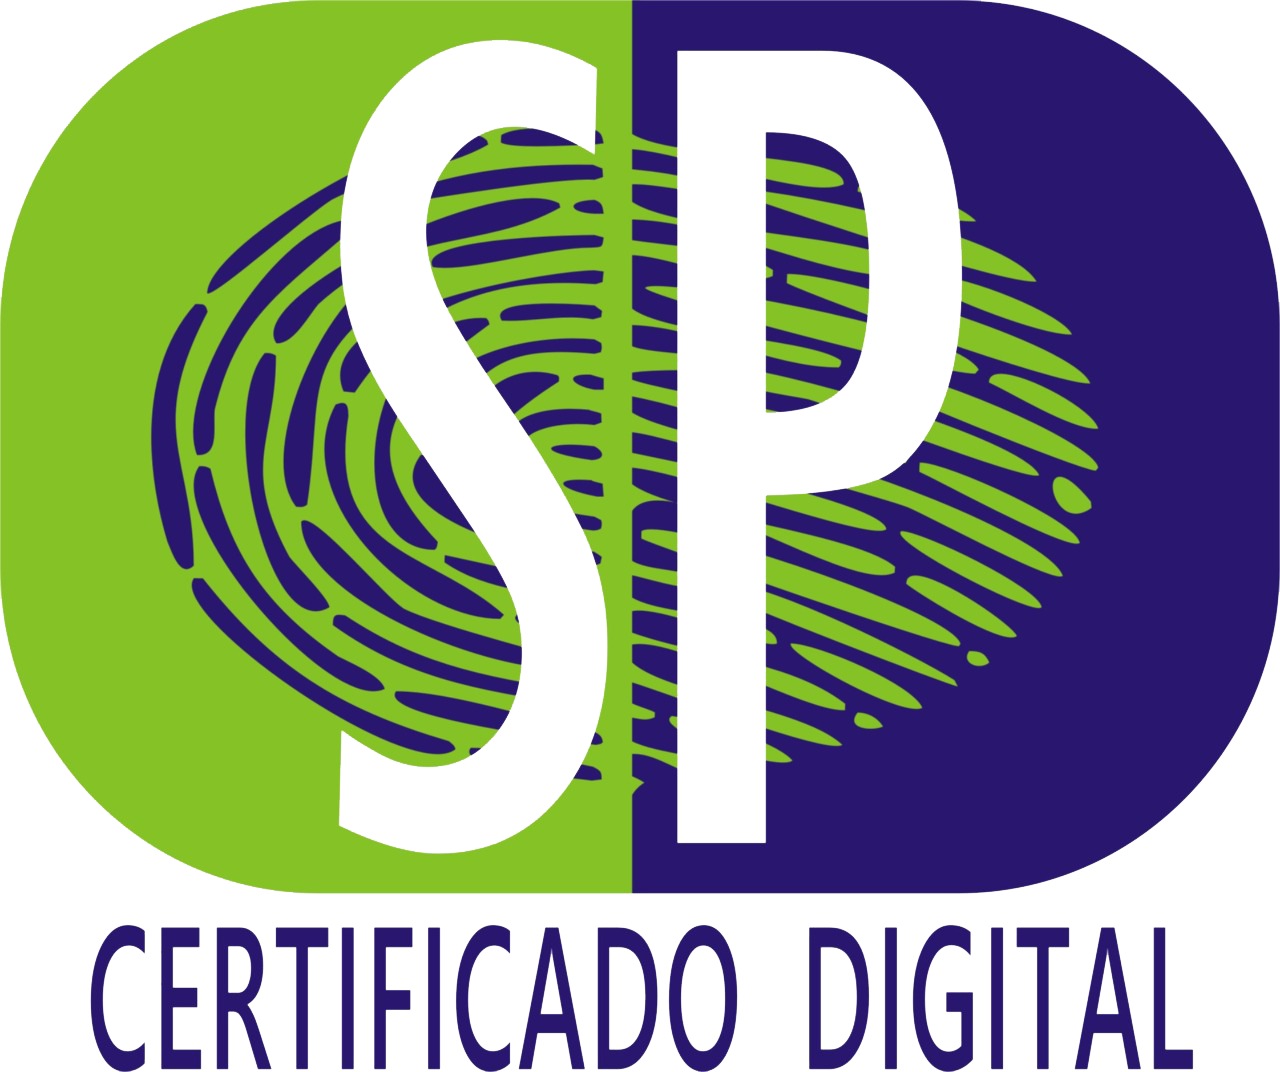 SP Certificado Digital | Emita via VídeoConferência